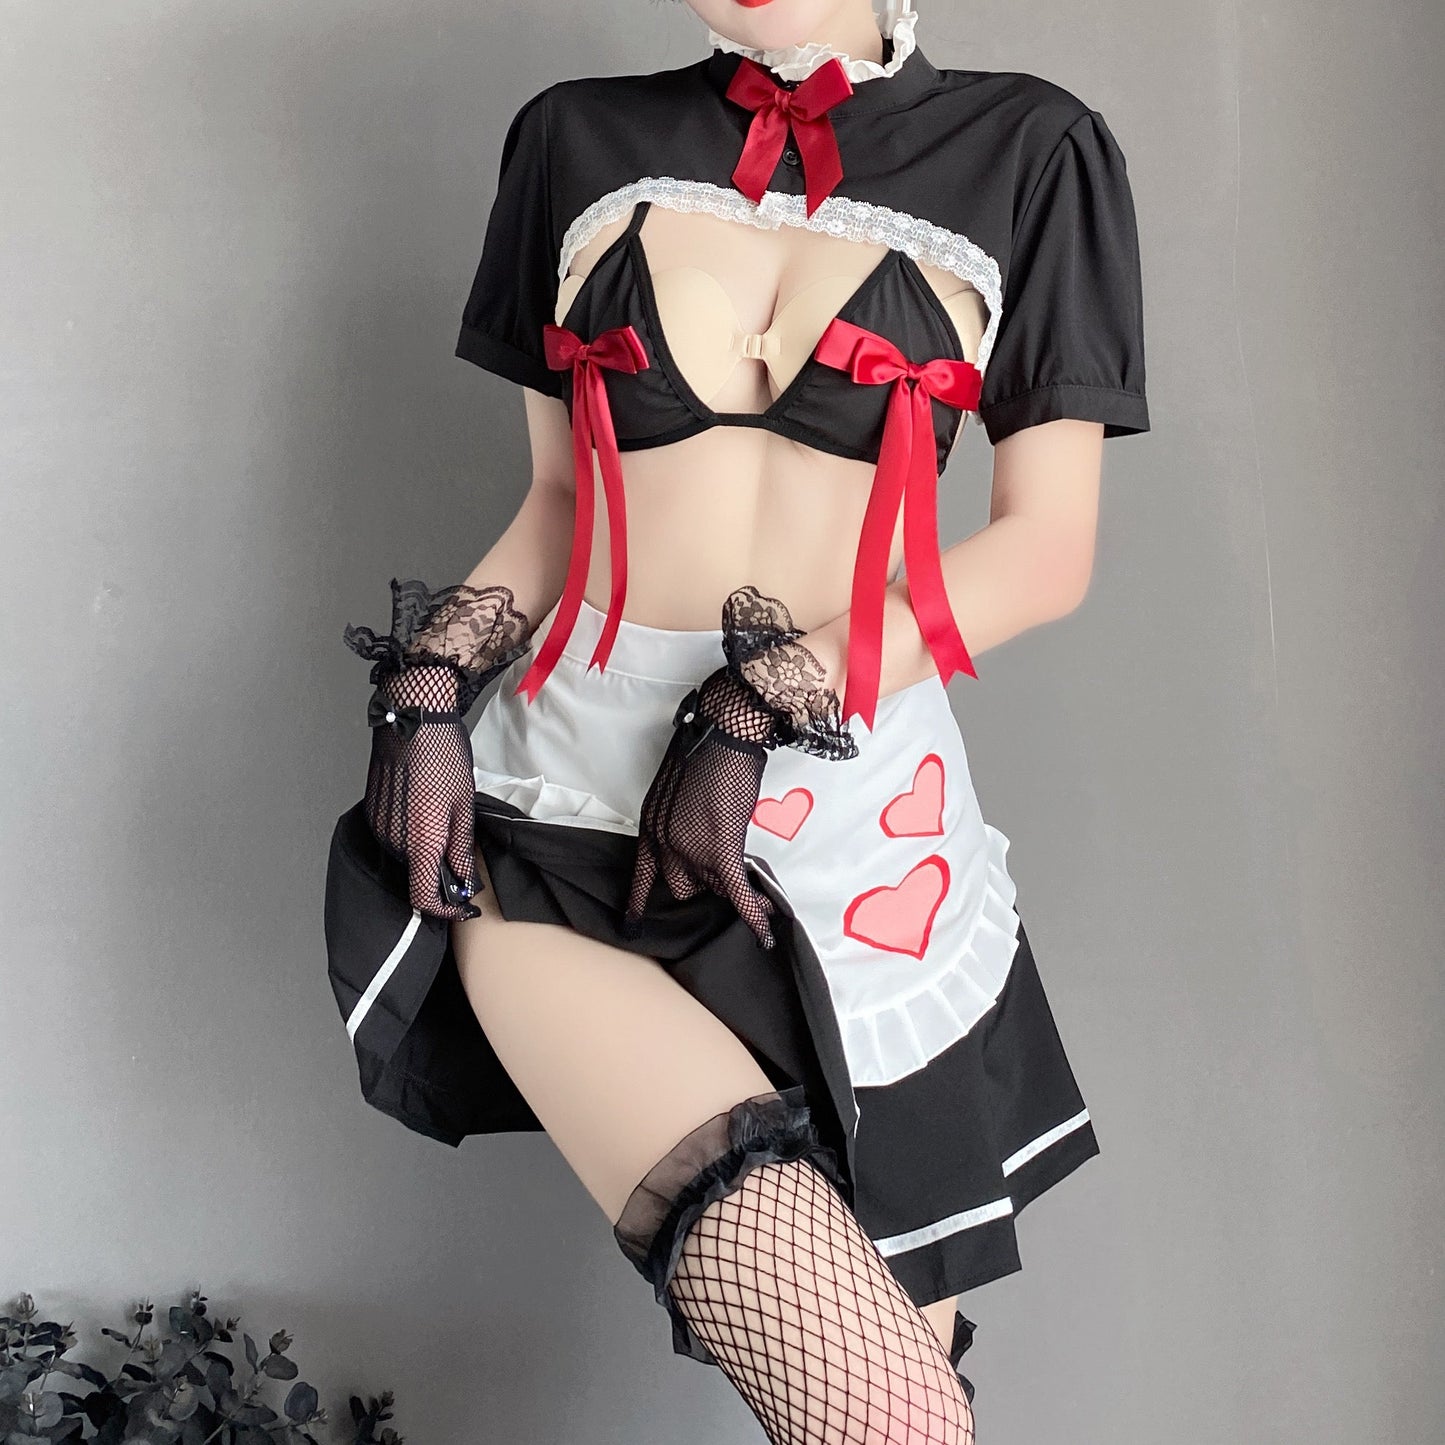 T-2620 Cute maid dress passion uniform seduction set - Quusvik